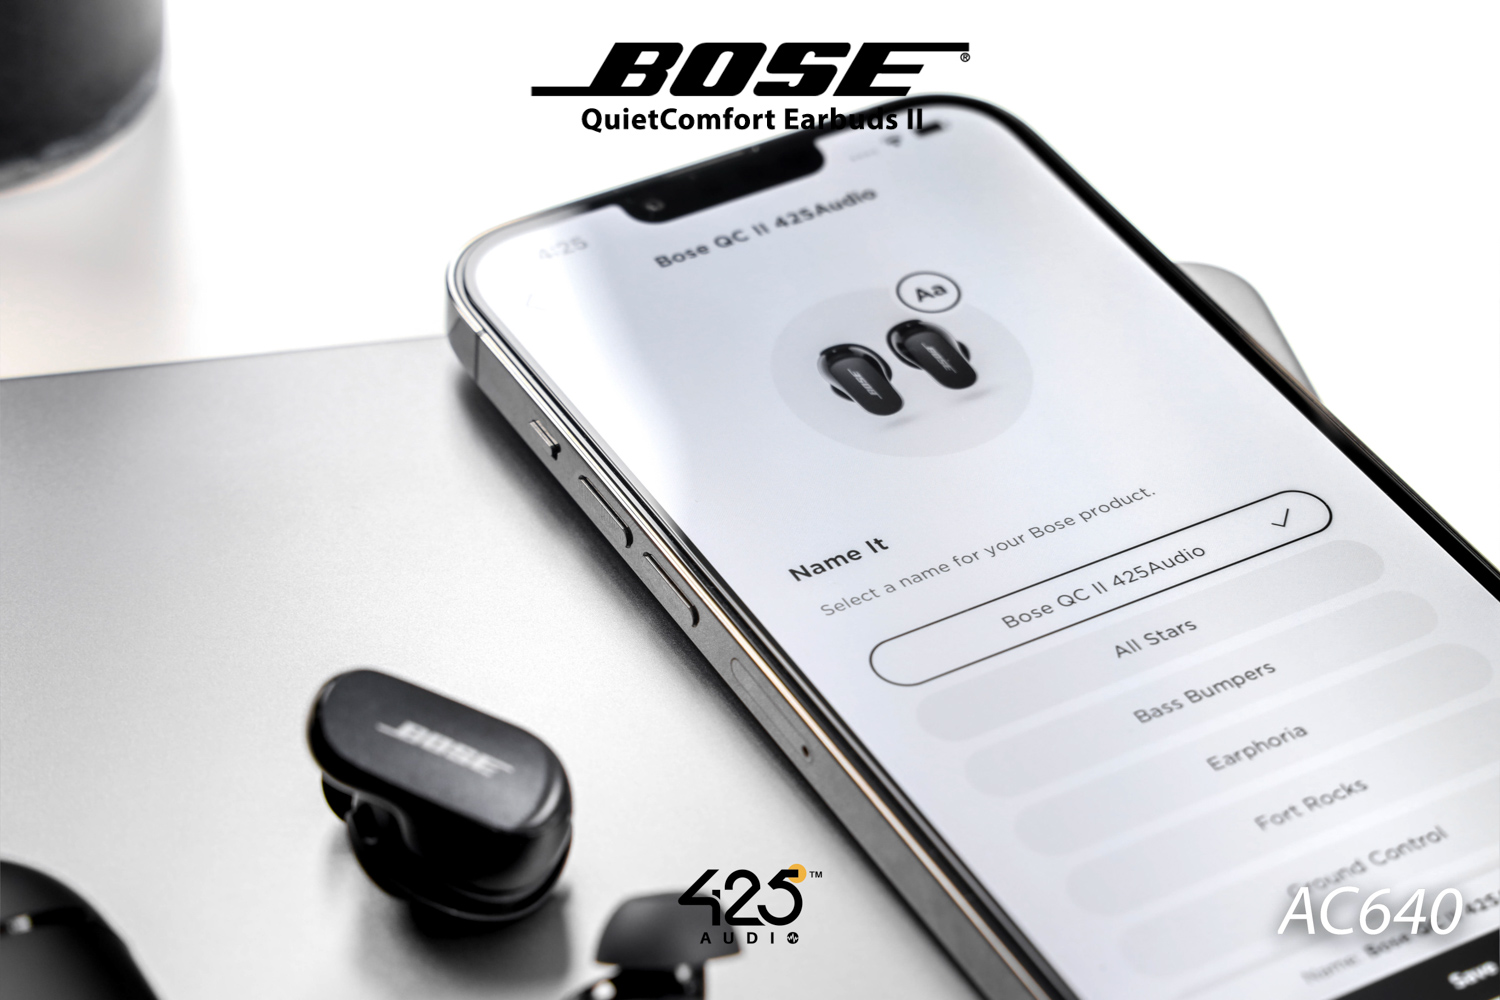 Bose QuietComfort Earbuds II,True Wireless,หูฟังไร้สาย,หูฟังบลูทูธ,หูฟังตัดเสียงรบกวน Earbuds,Active Noise Cancelling,fast charge,หูฟังไมค์ดี